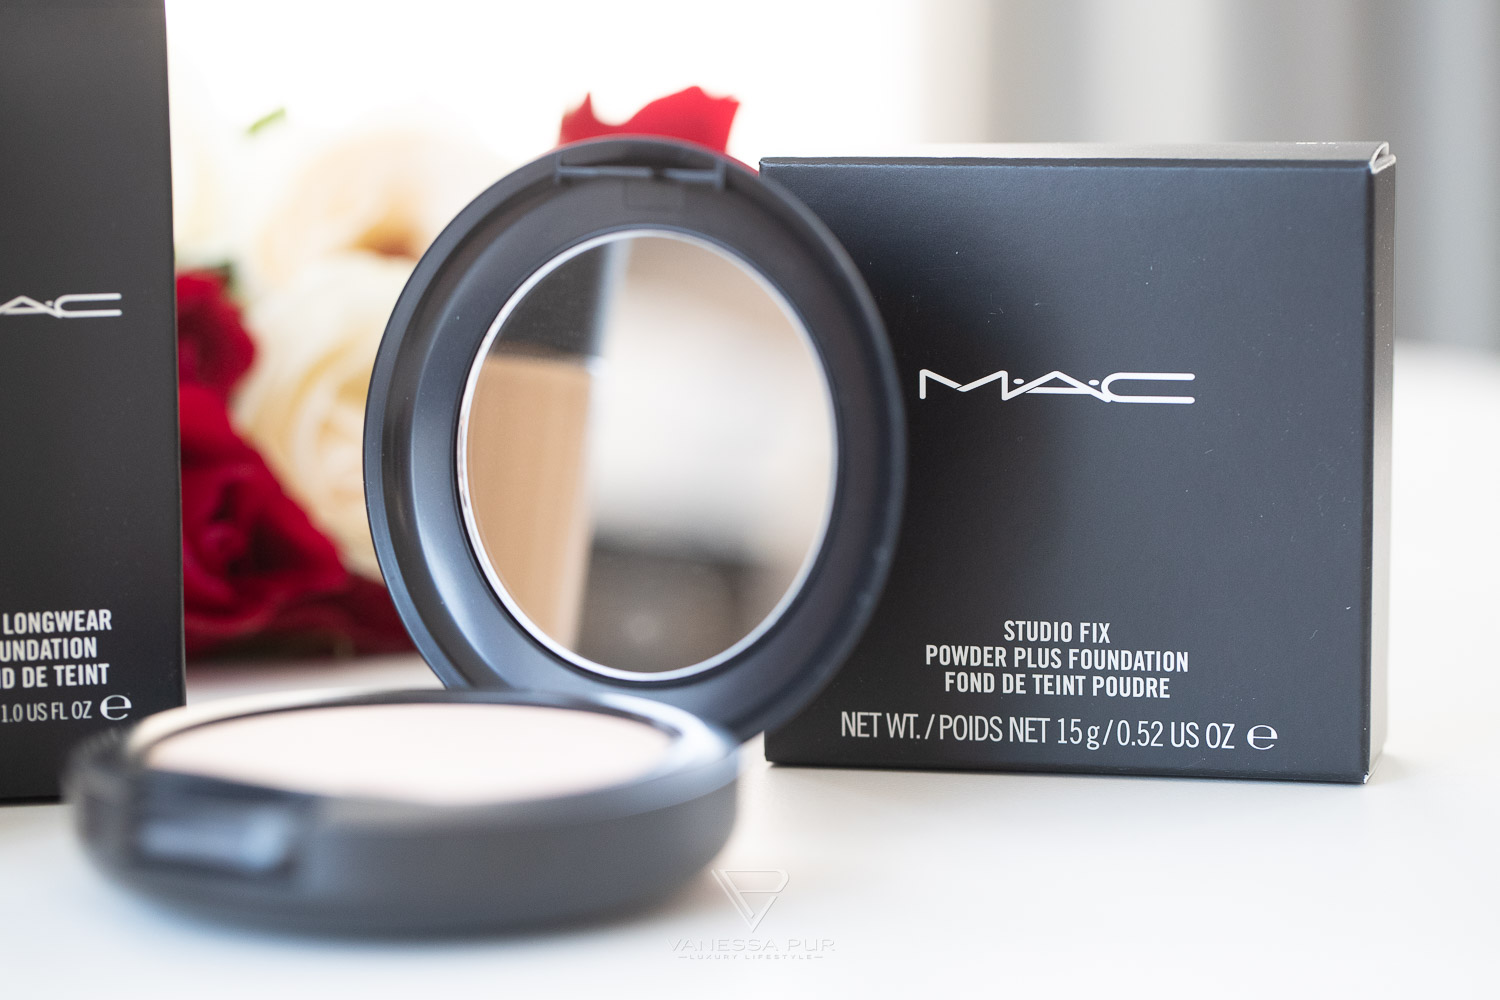 Back to MAC - Return to MAC Cosmetics B2M - beauty cosmetics